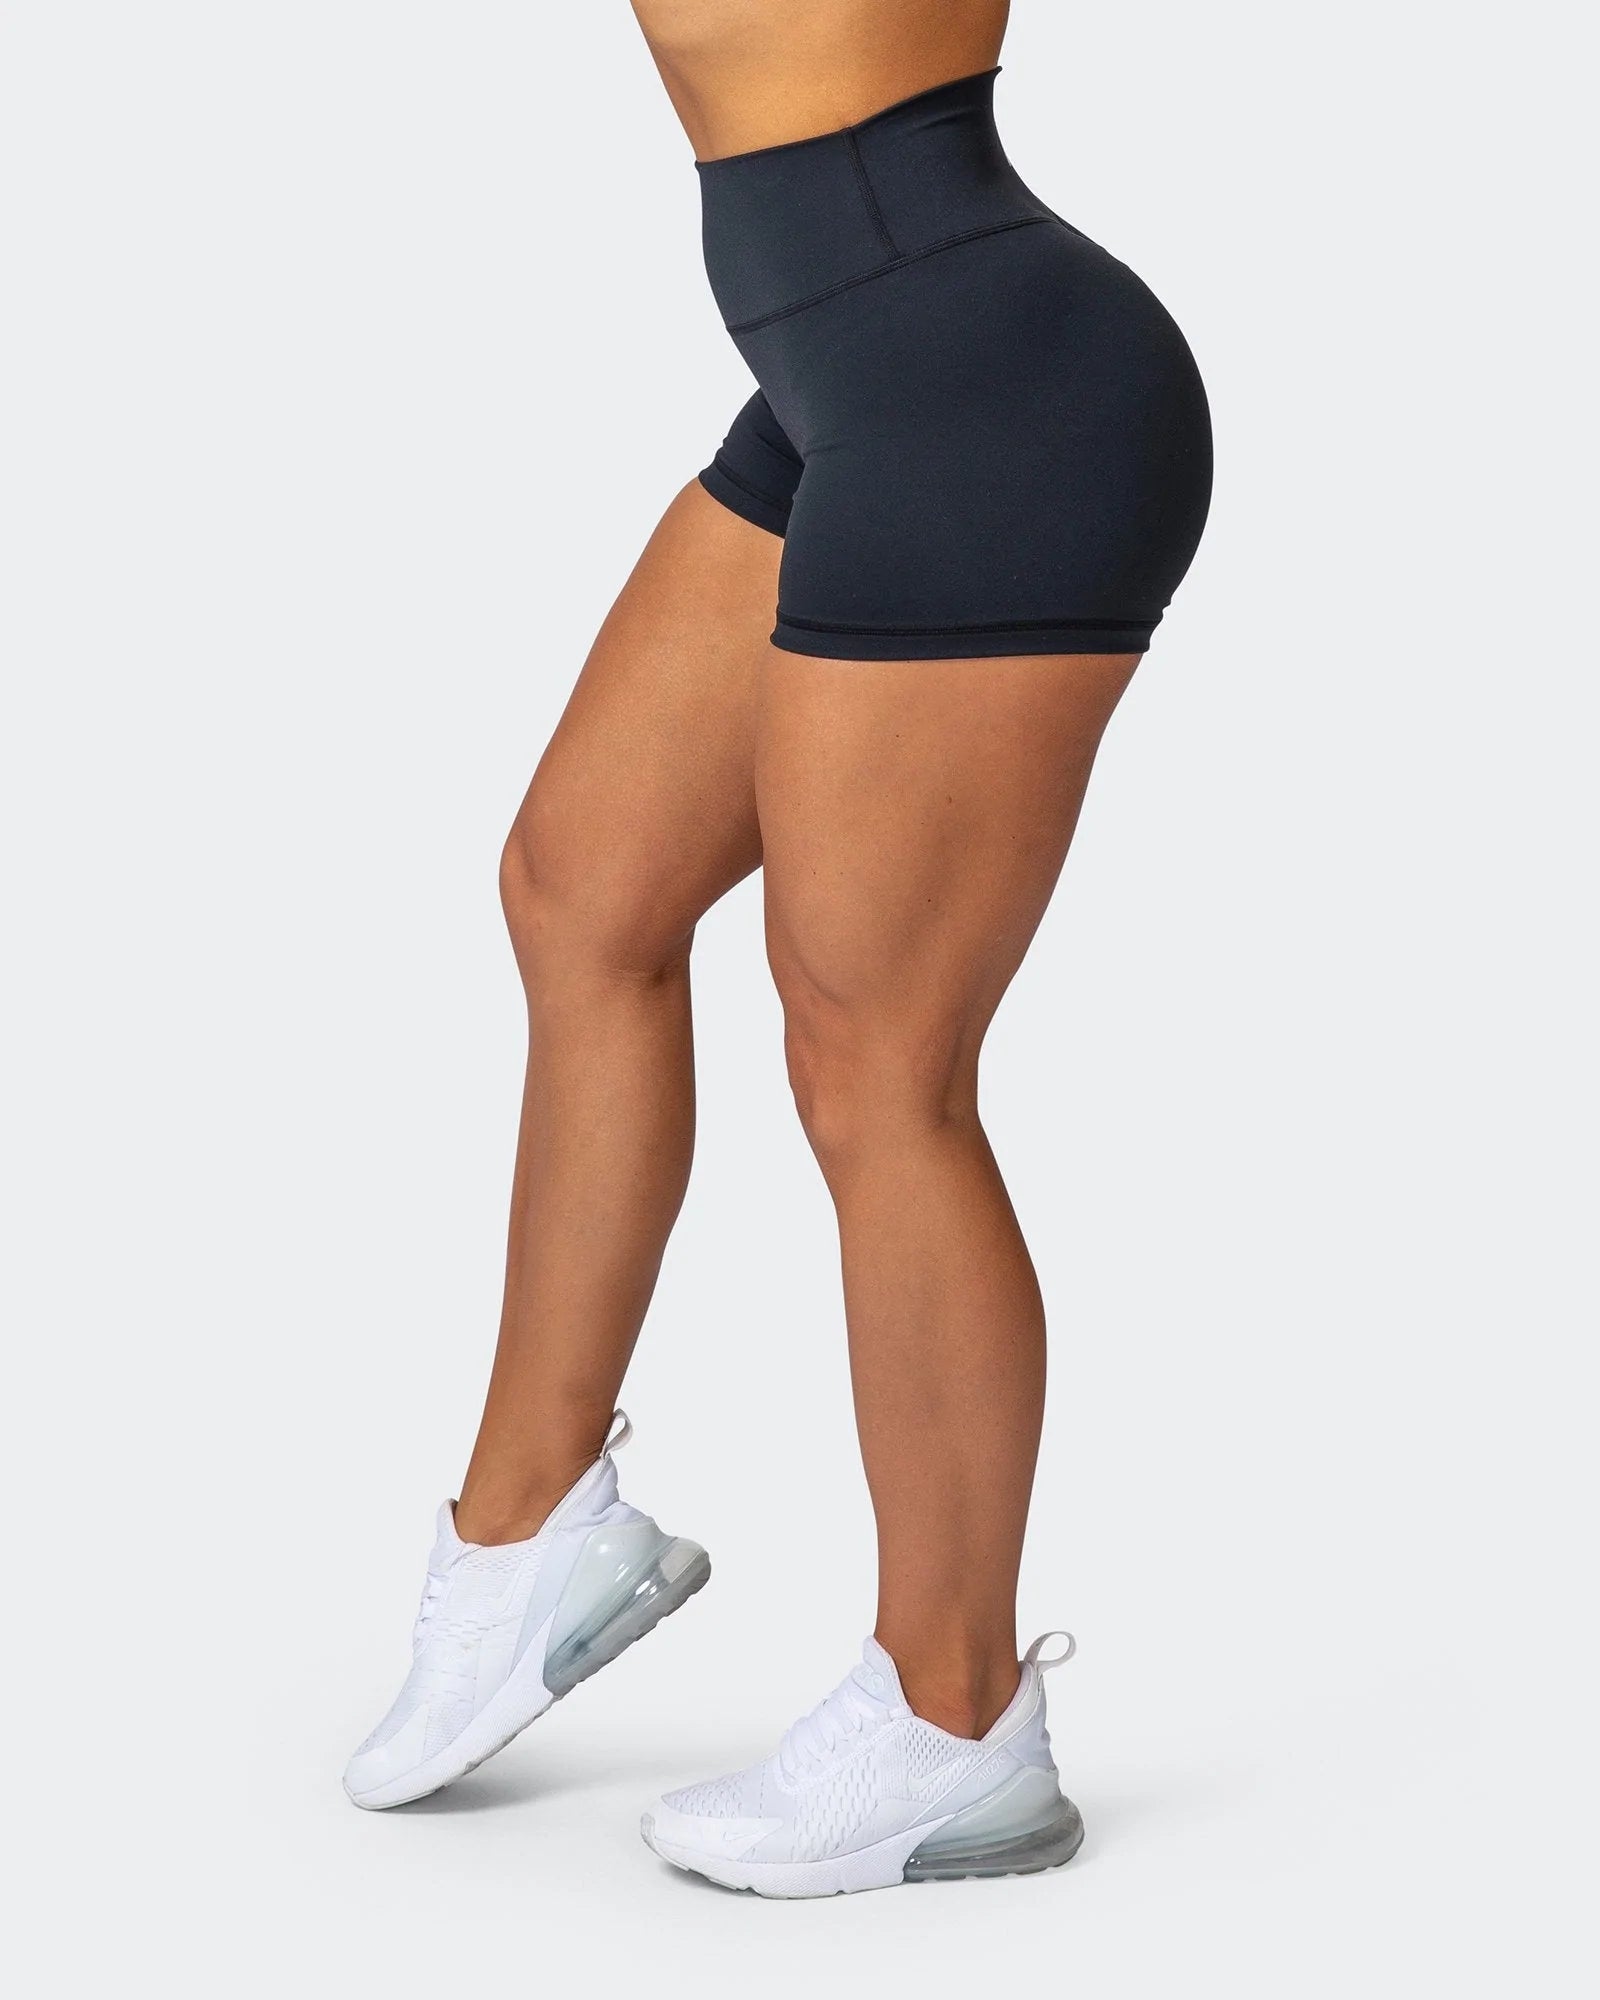 DODOING Womens Booty Shorts Casual Cotton Yoga Short Shorts Mini Hot Pants  Sport Leggings Fold Over Shorts Size S-XL